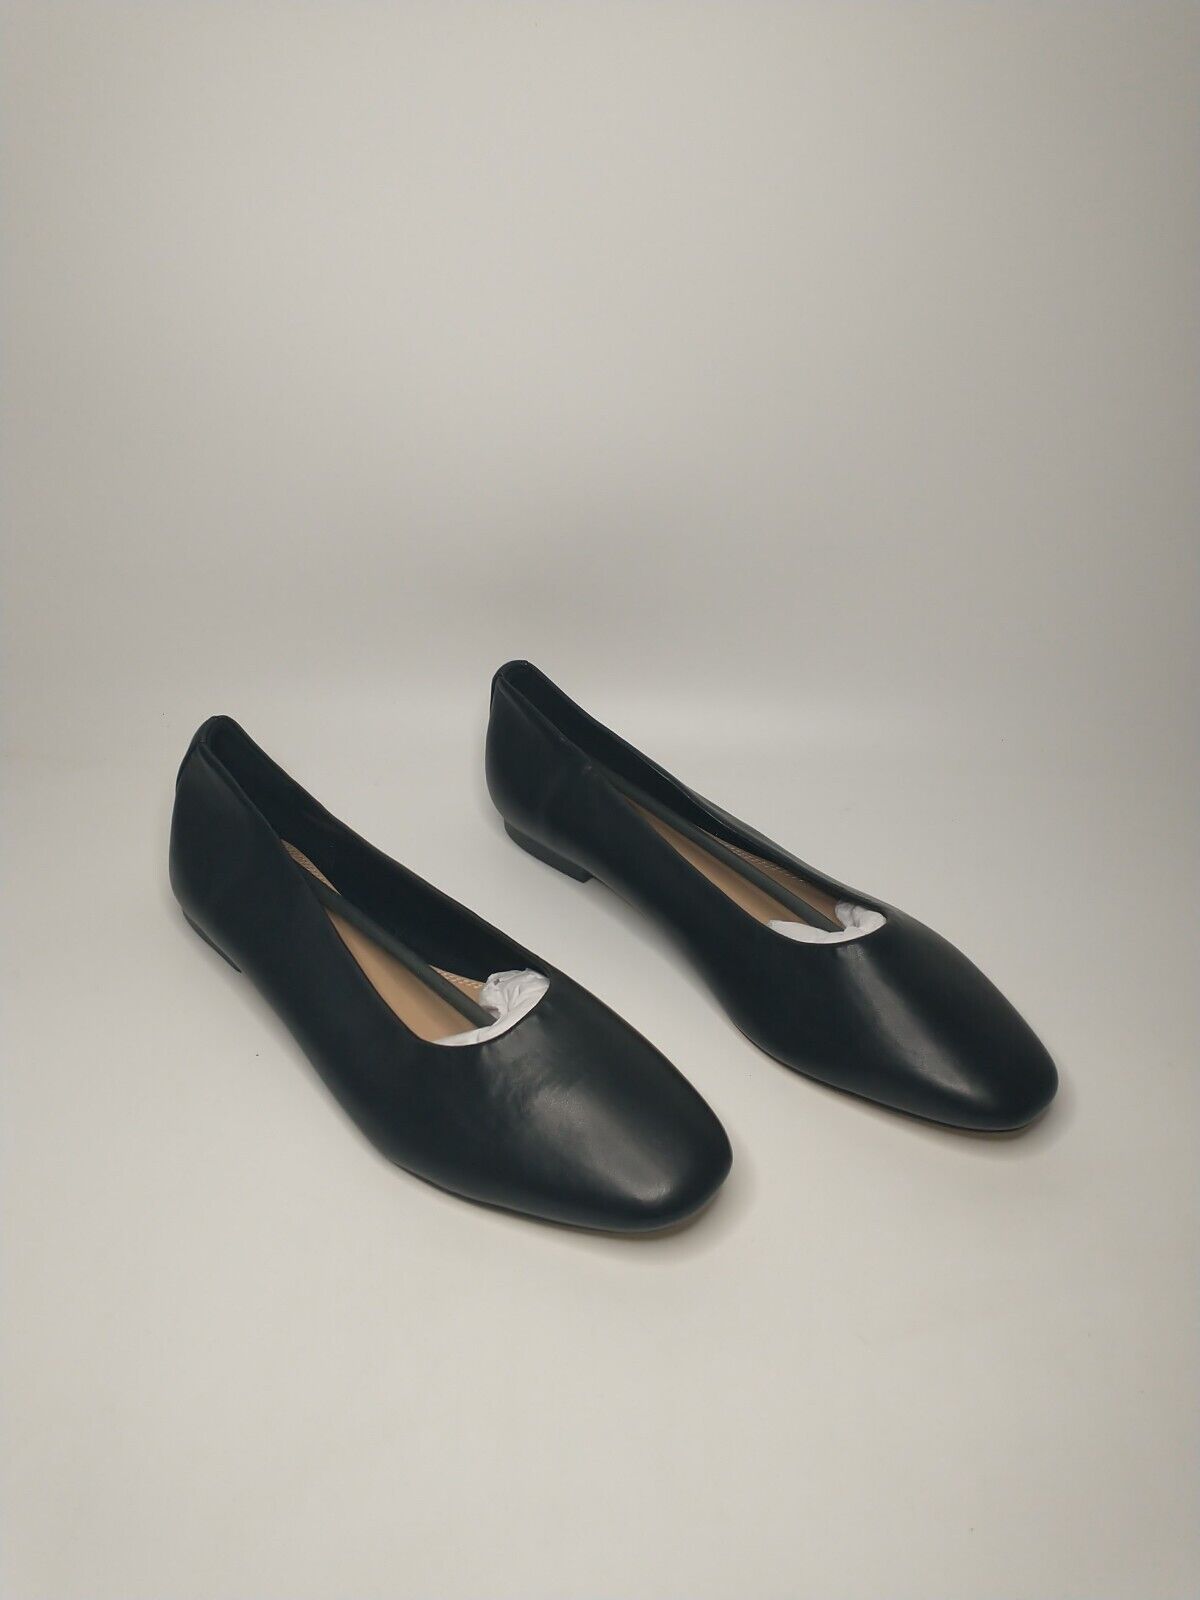 LTS Almond Toe Ballerina Shoes - Black. Size UK 9